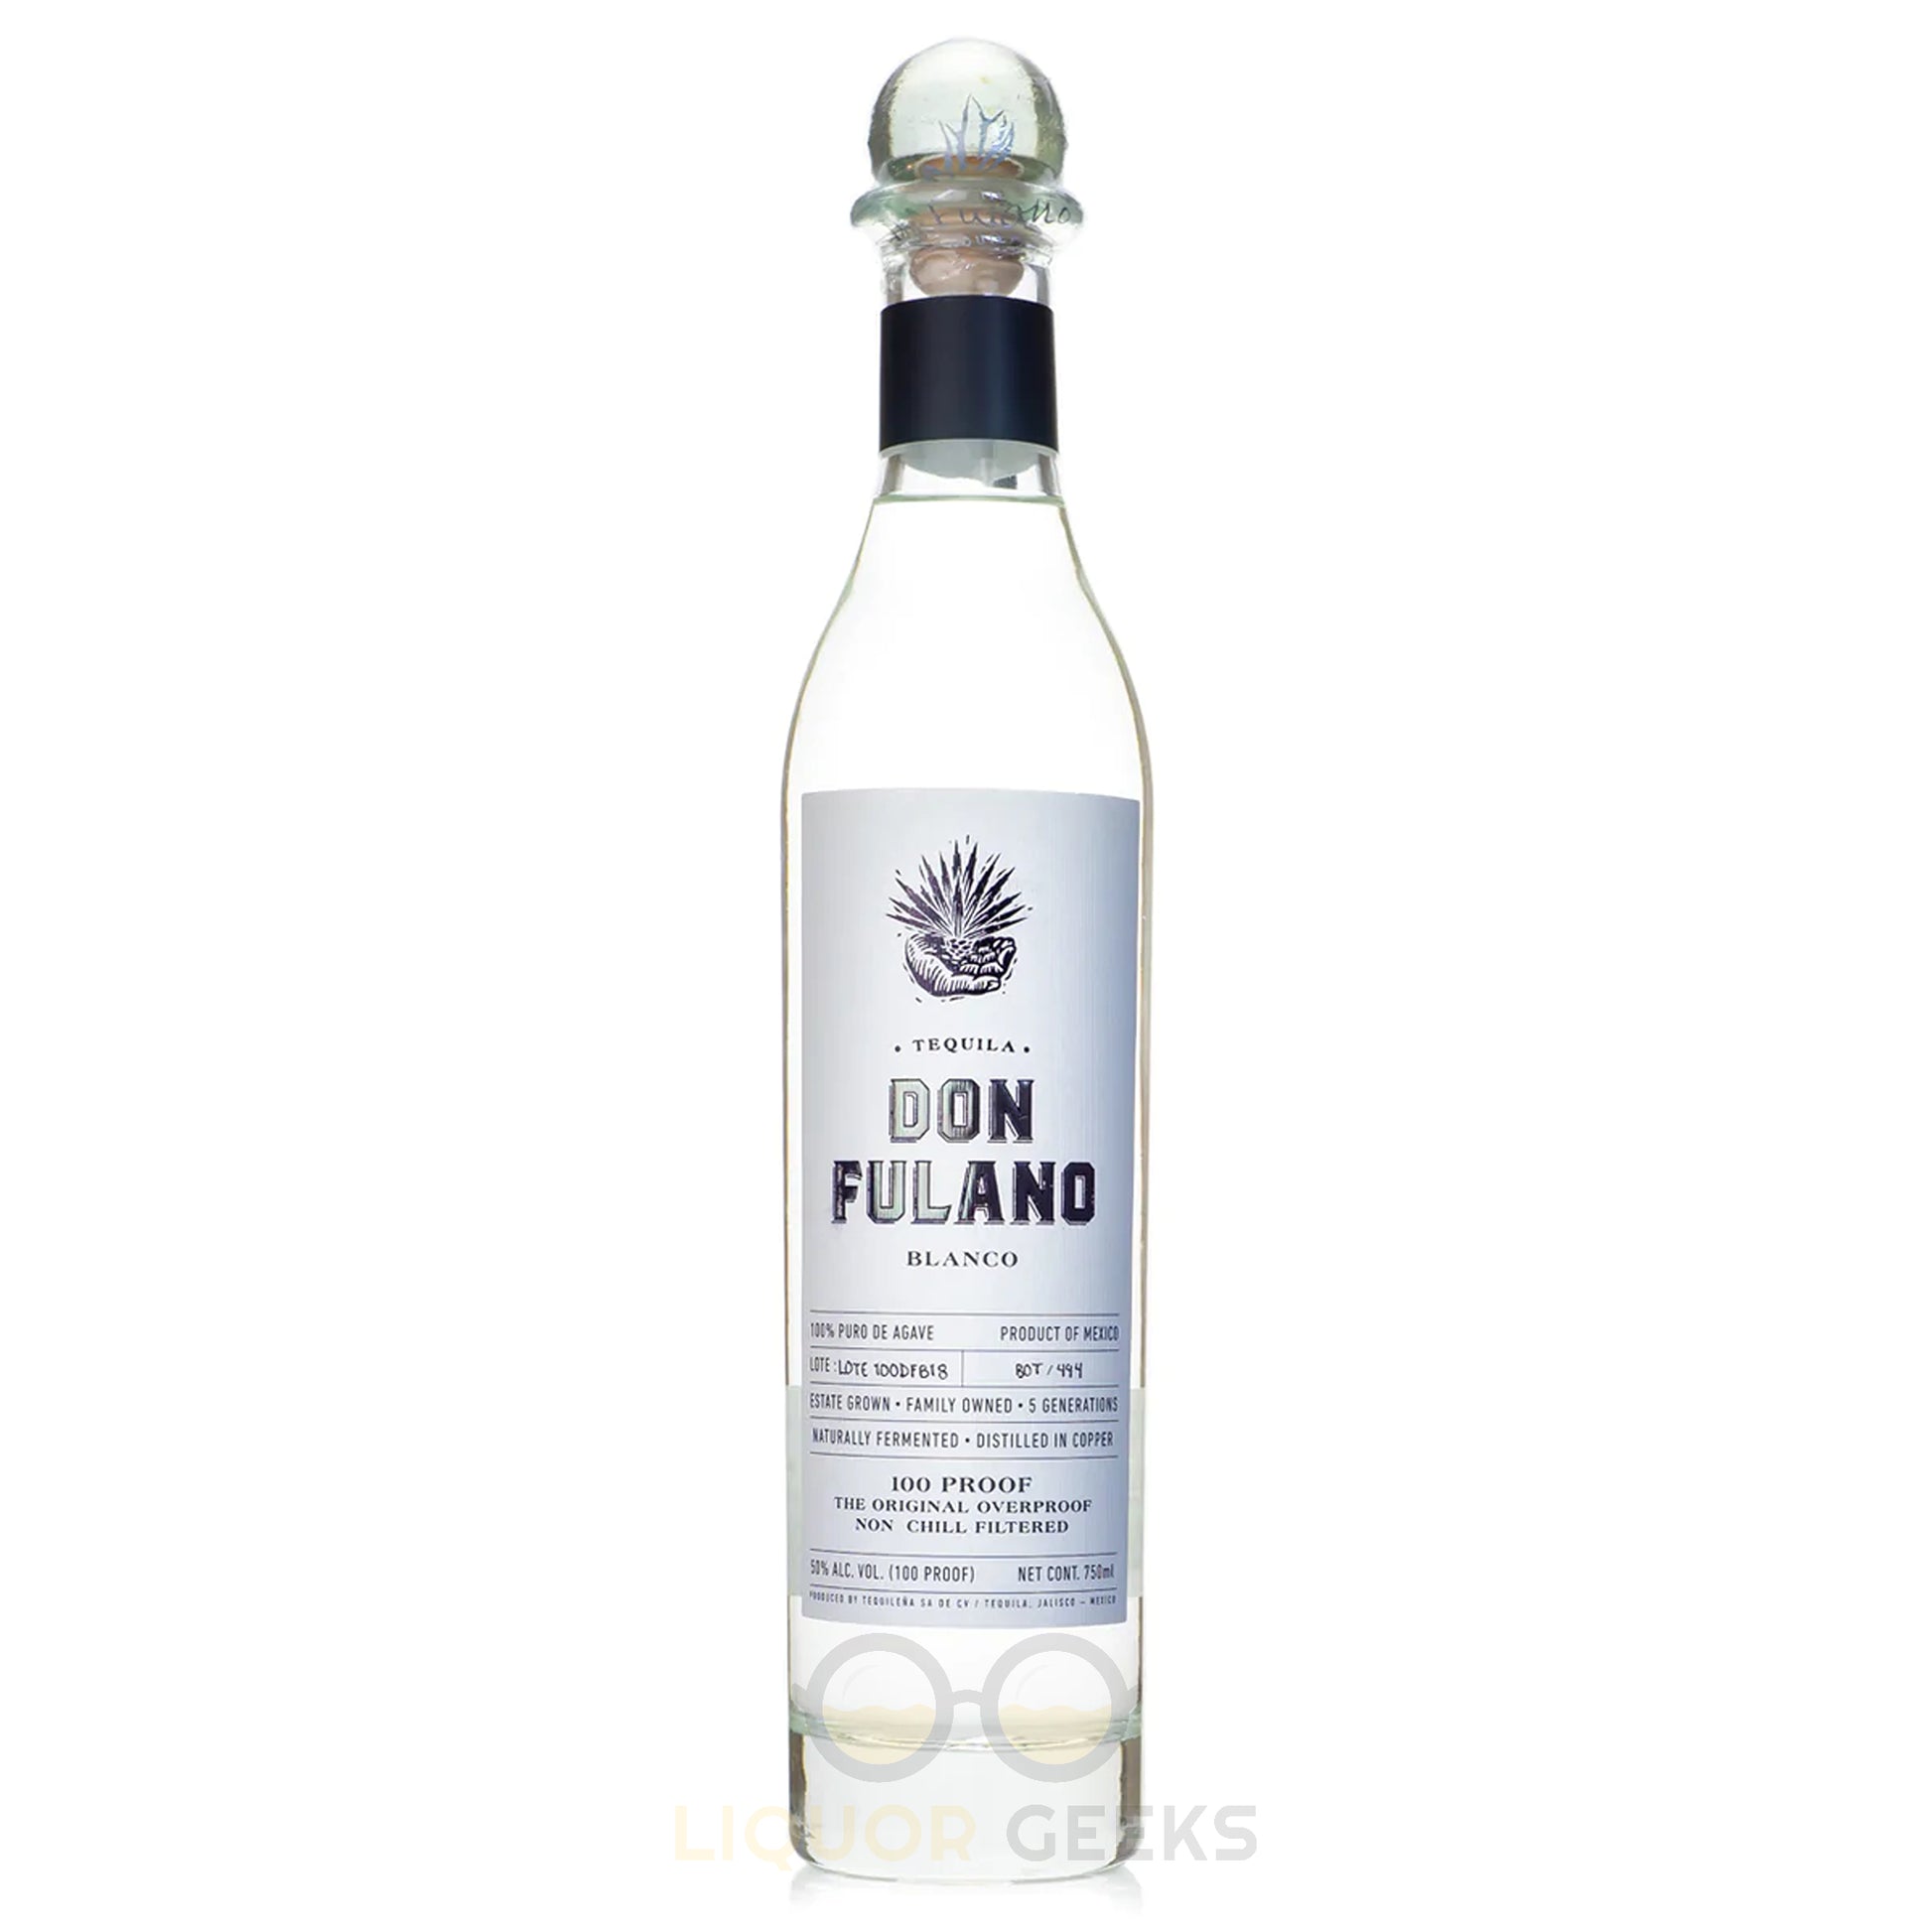 Don Fulano Tequila Blanco 100 Proof - Liquor Geeks